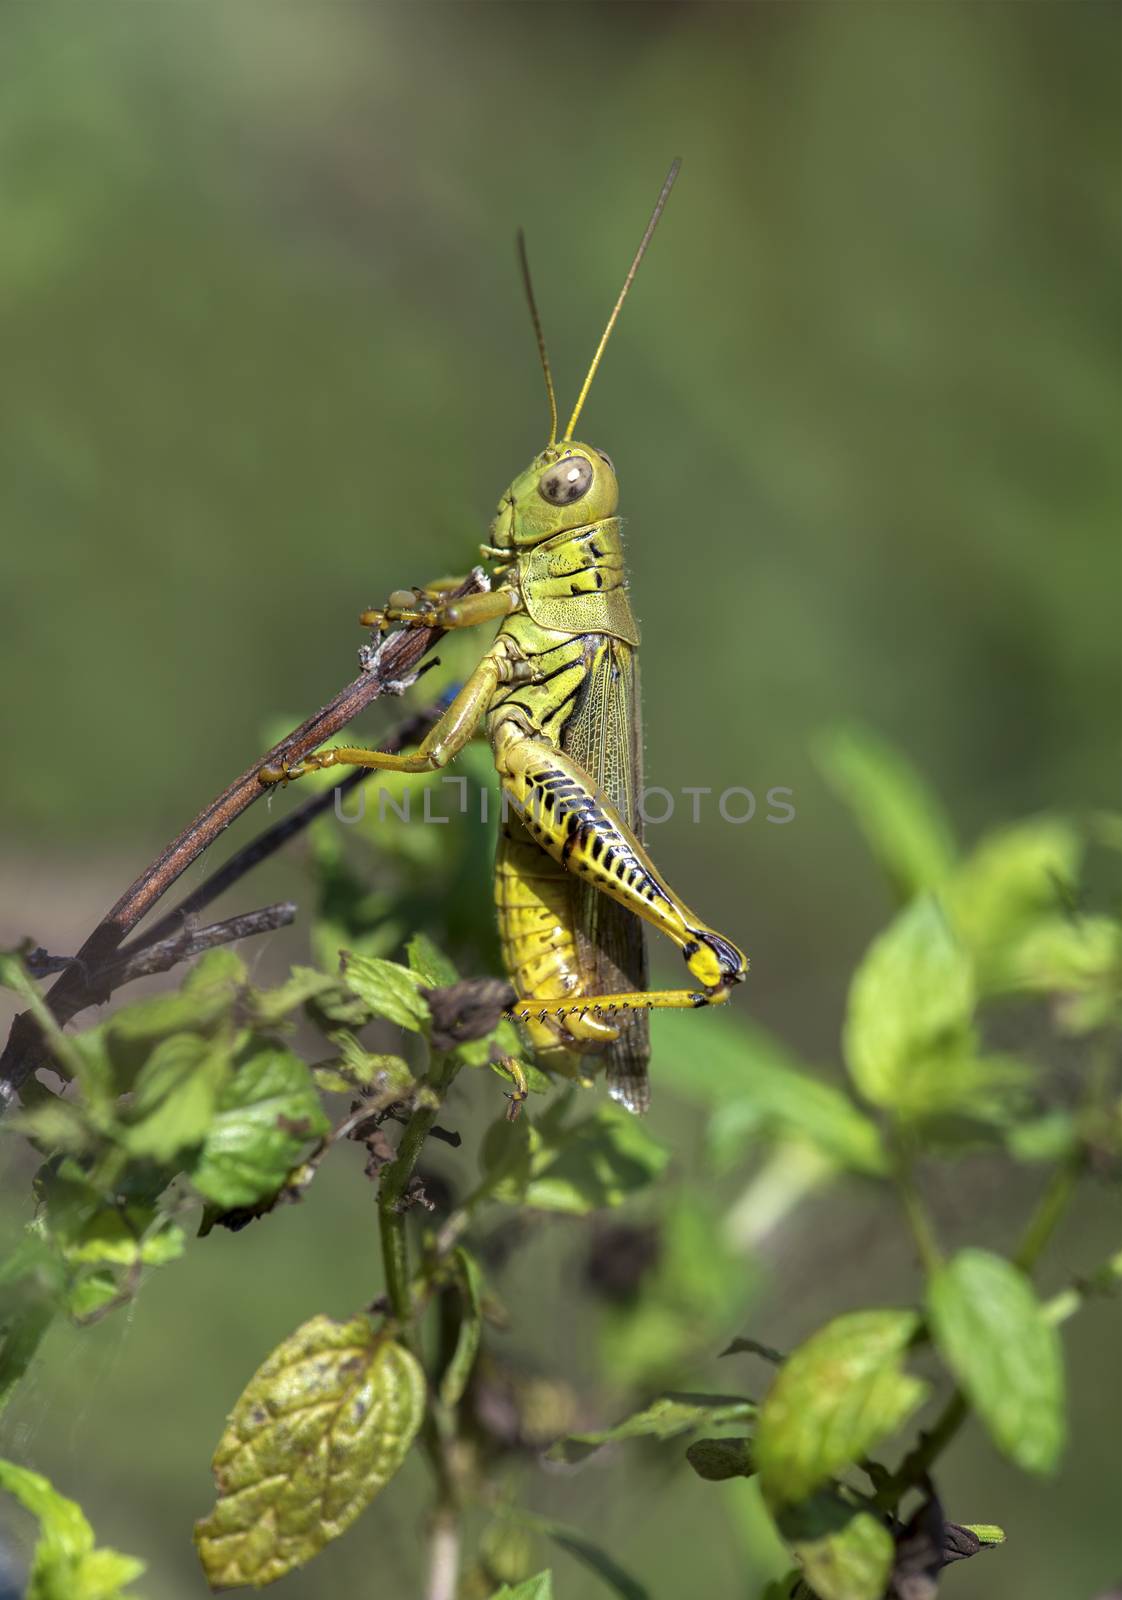 Grasshopper hiding behind mint leaves